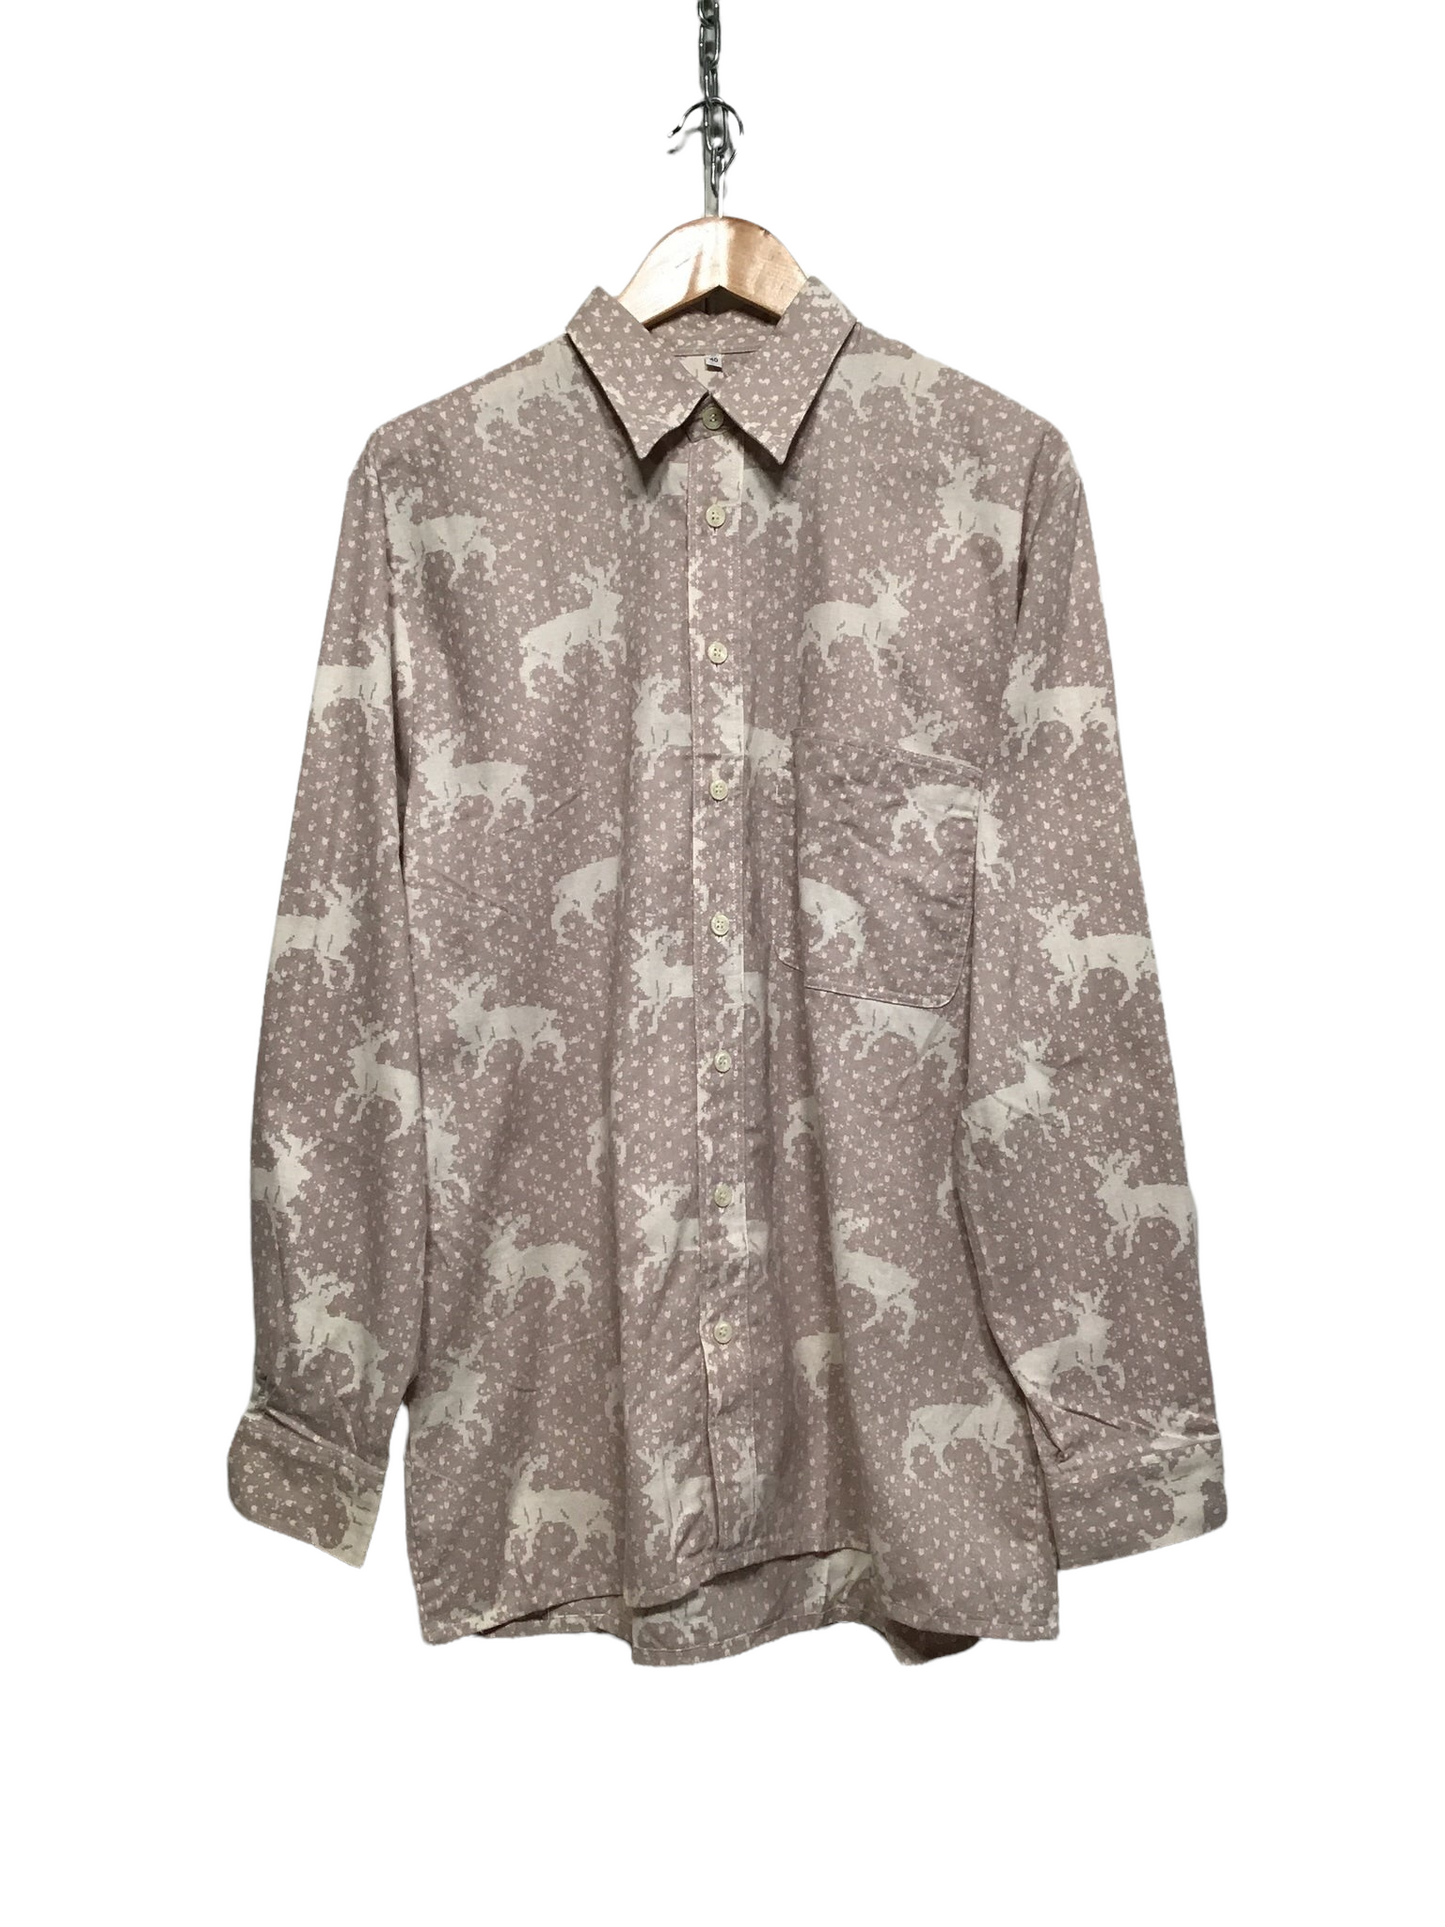 Deer Pattern 70’s Shirt (Size M)